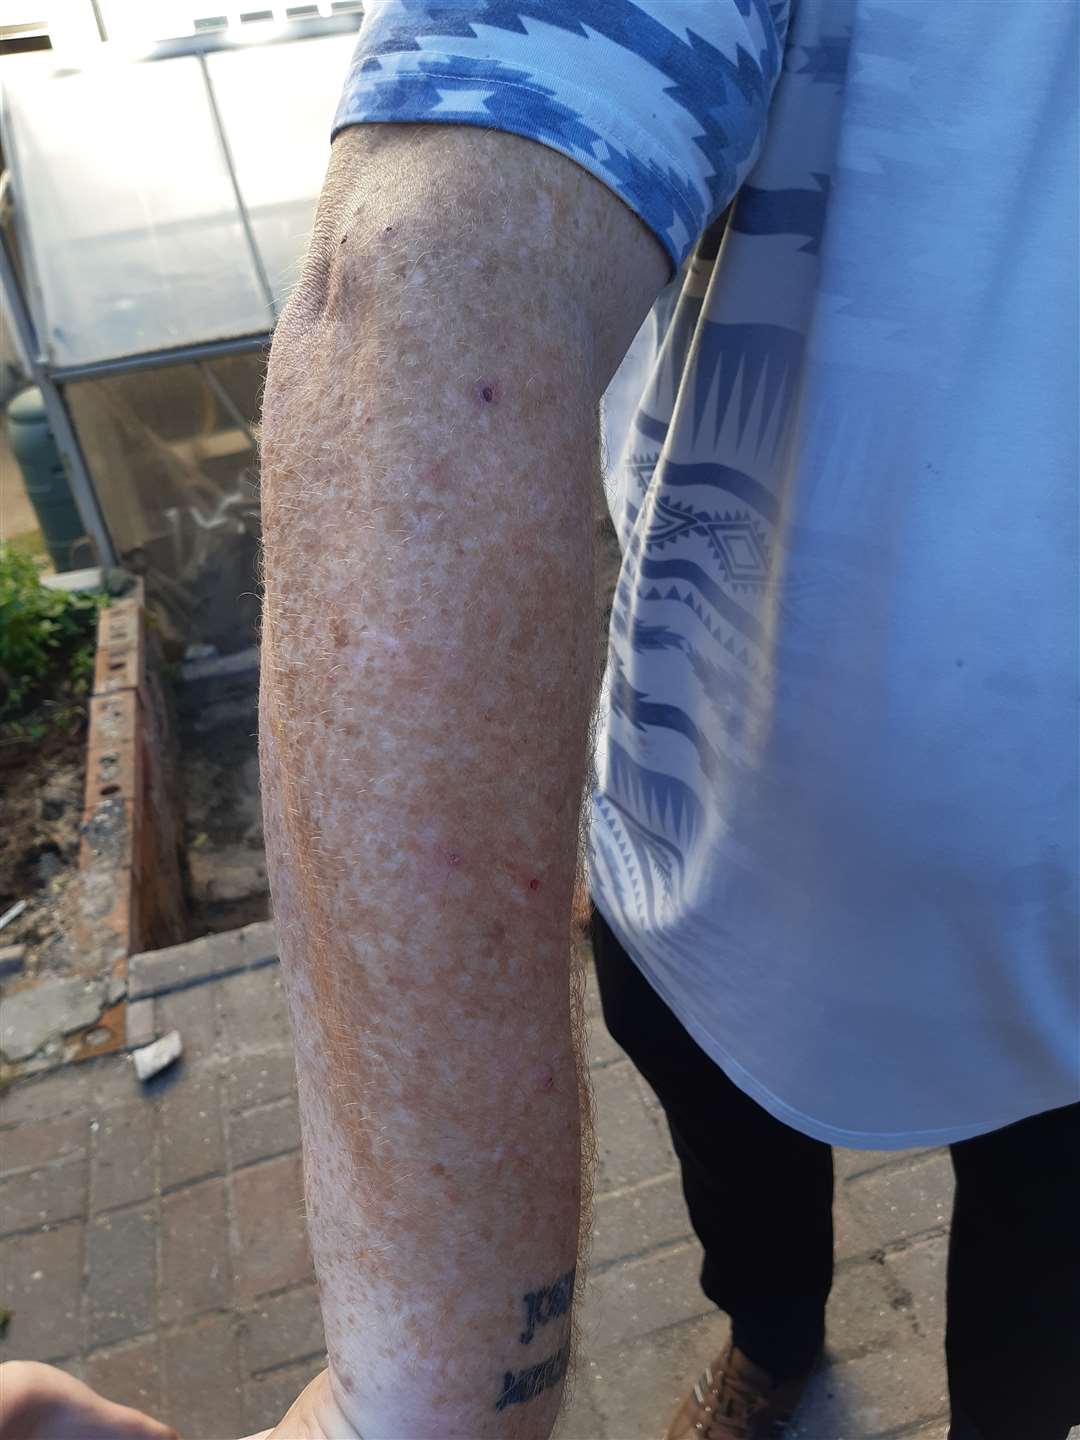 Bug bites on Stephen's arm